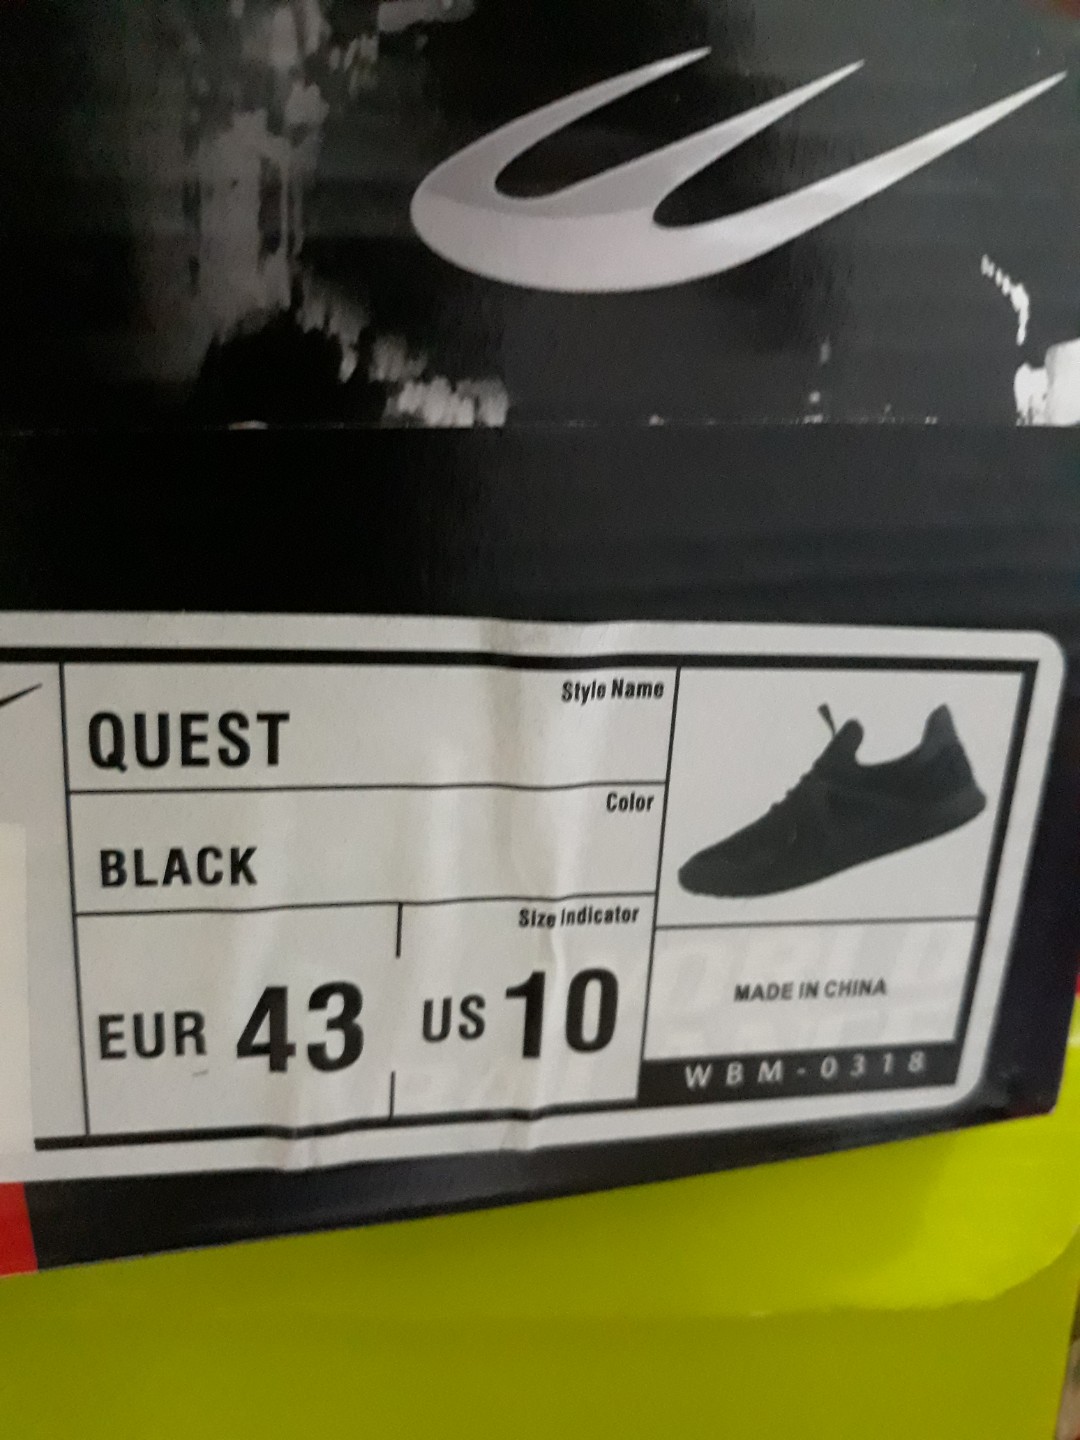 mens shoe size 10 in eu